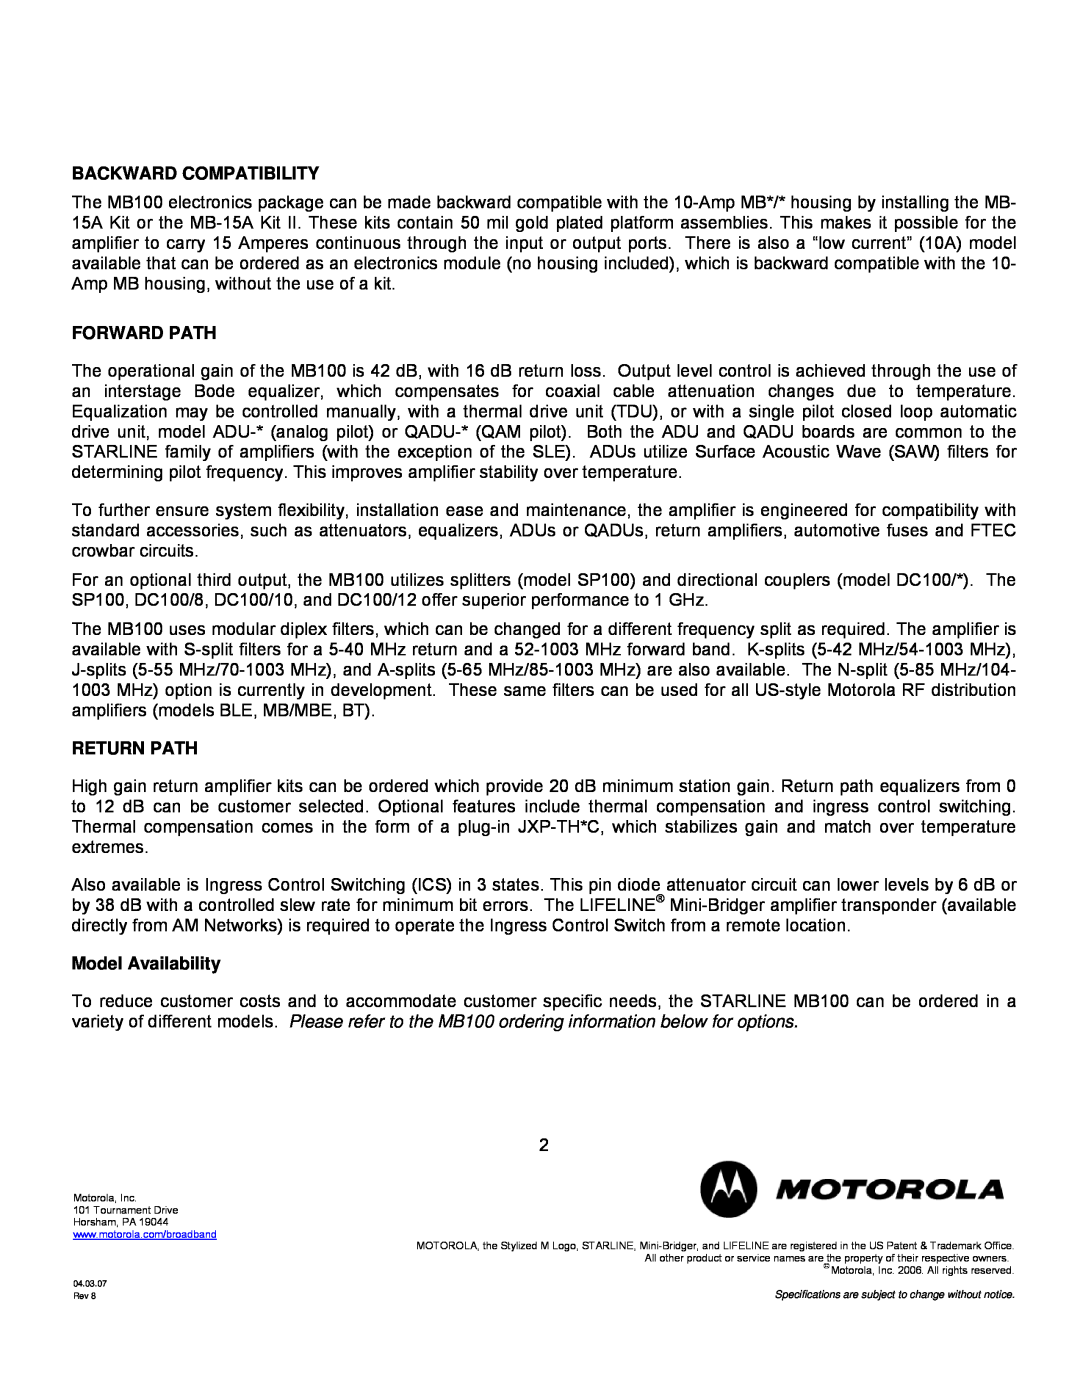 Motorola MB100 specifications Backward Compatibility, Forward Path, Return Path, Model Availability 